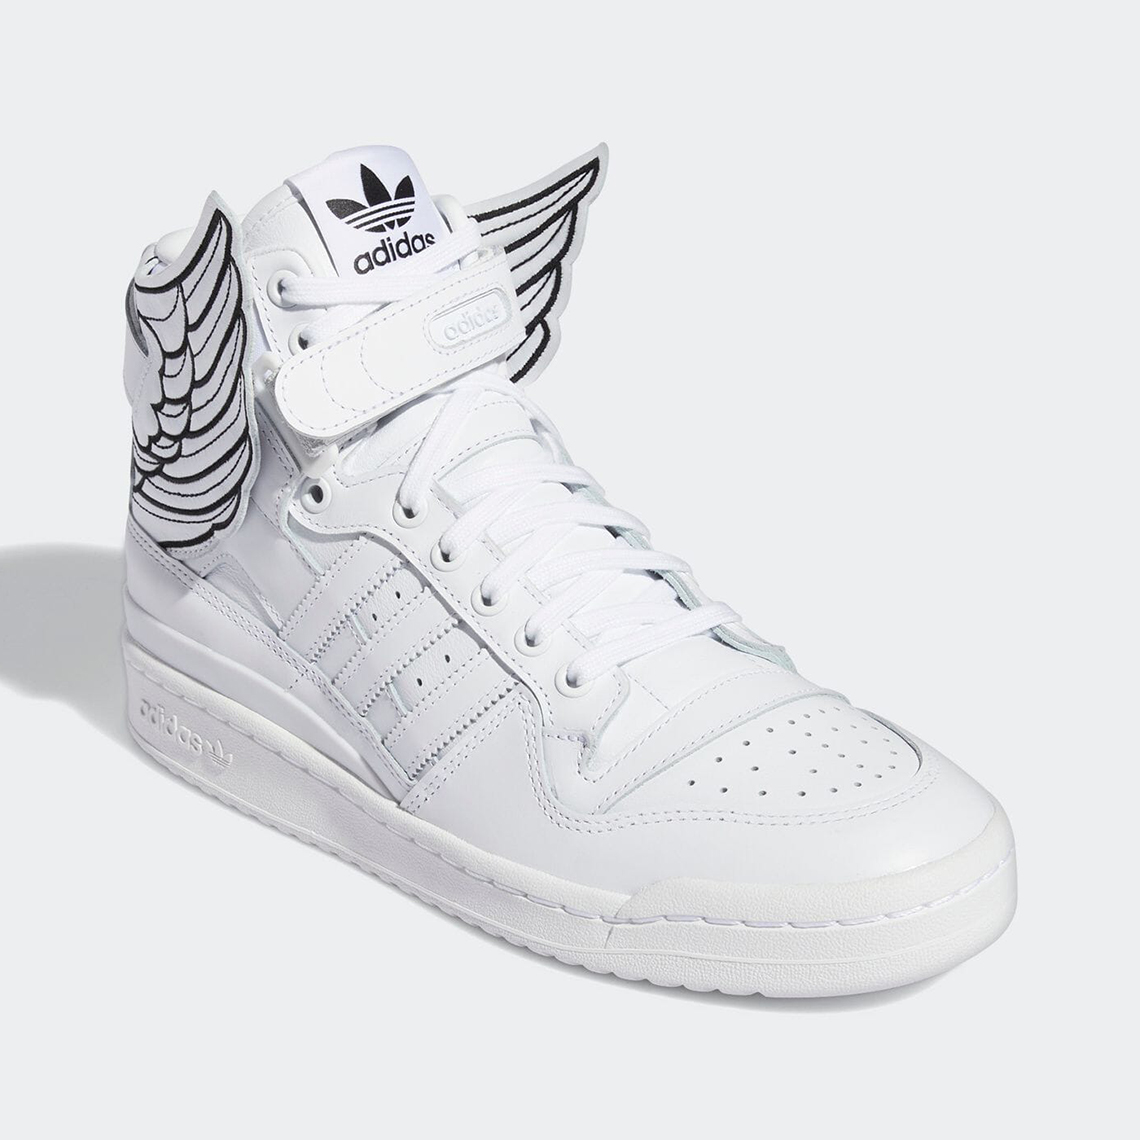 Jeremy Scott Adidas Forum Wings 4 0 White Black Gx9445 1